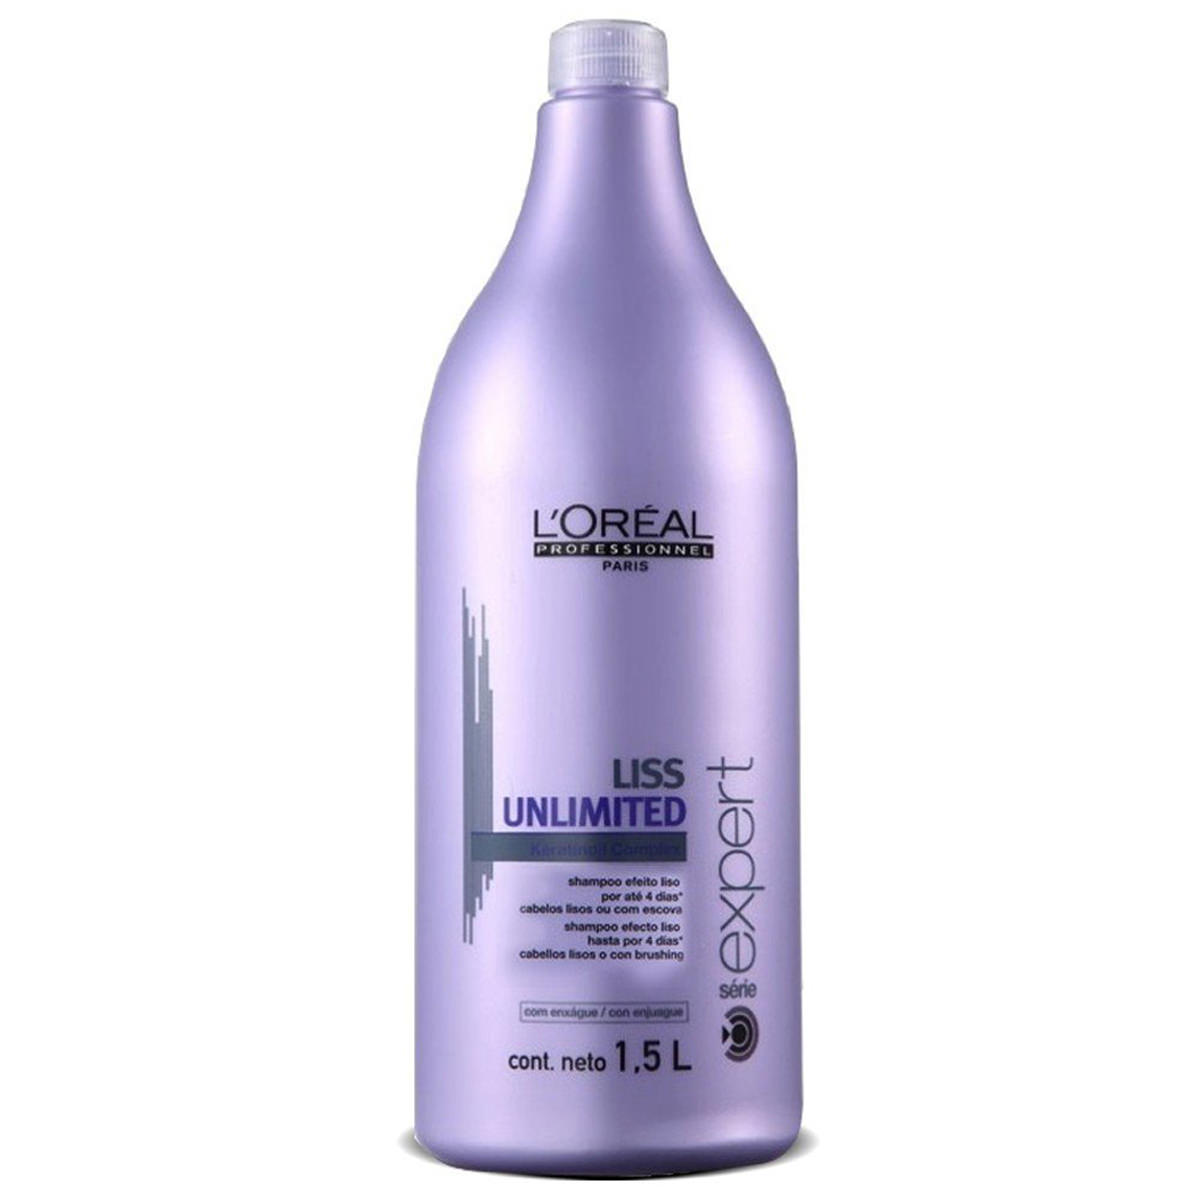 L'oreal-Professionnel-Liss-Unlimited-Shampoo-(1500-ml)-sfw(1)